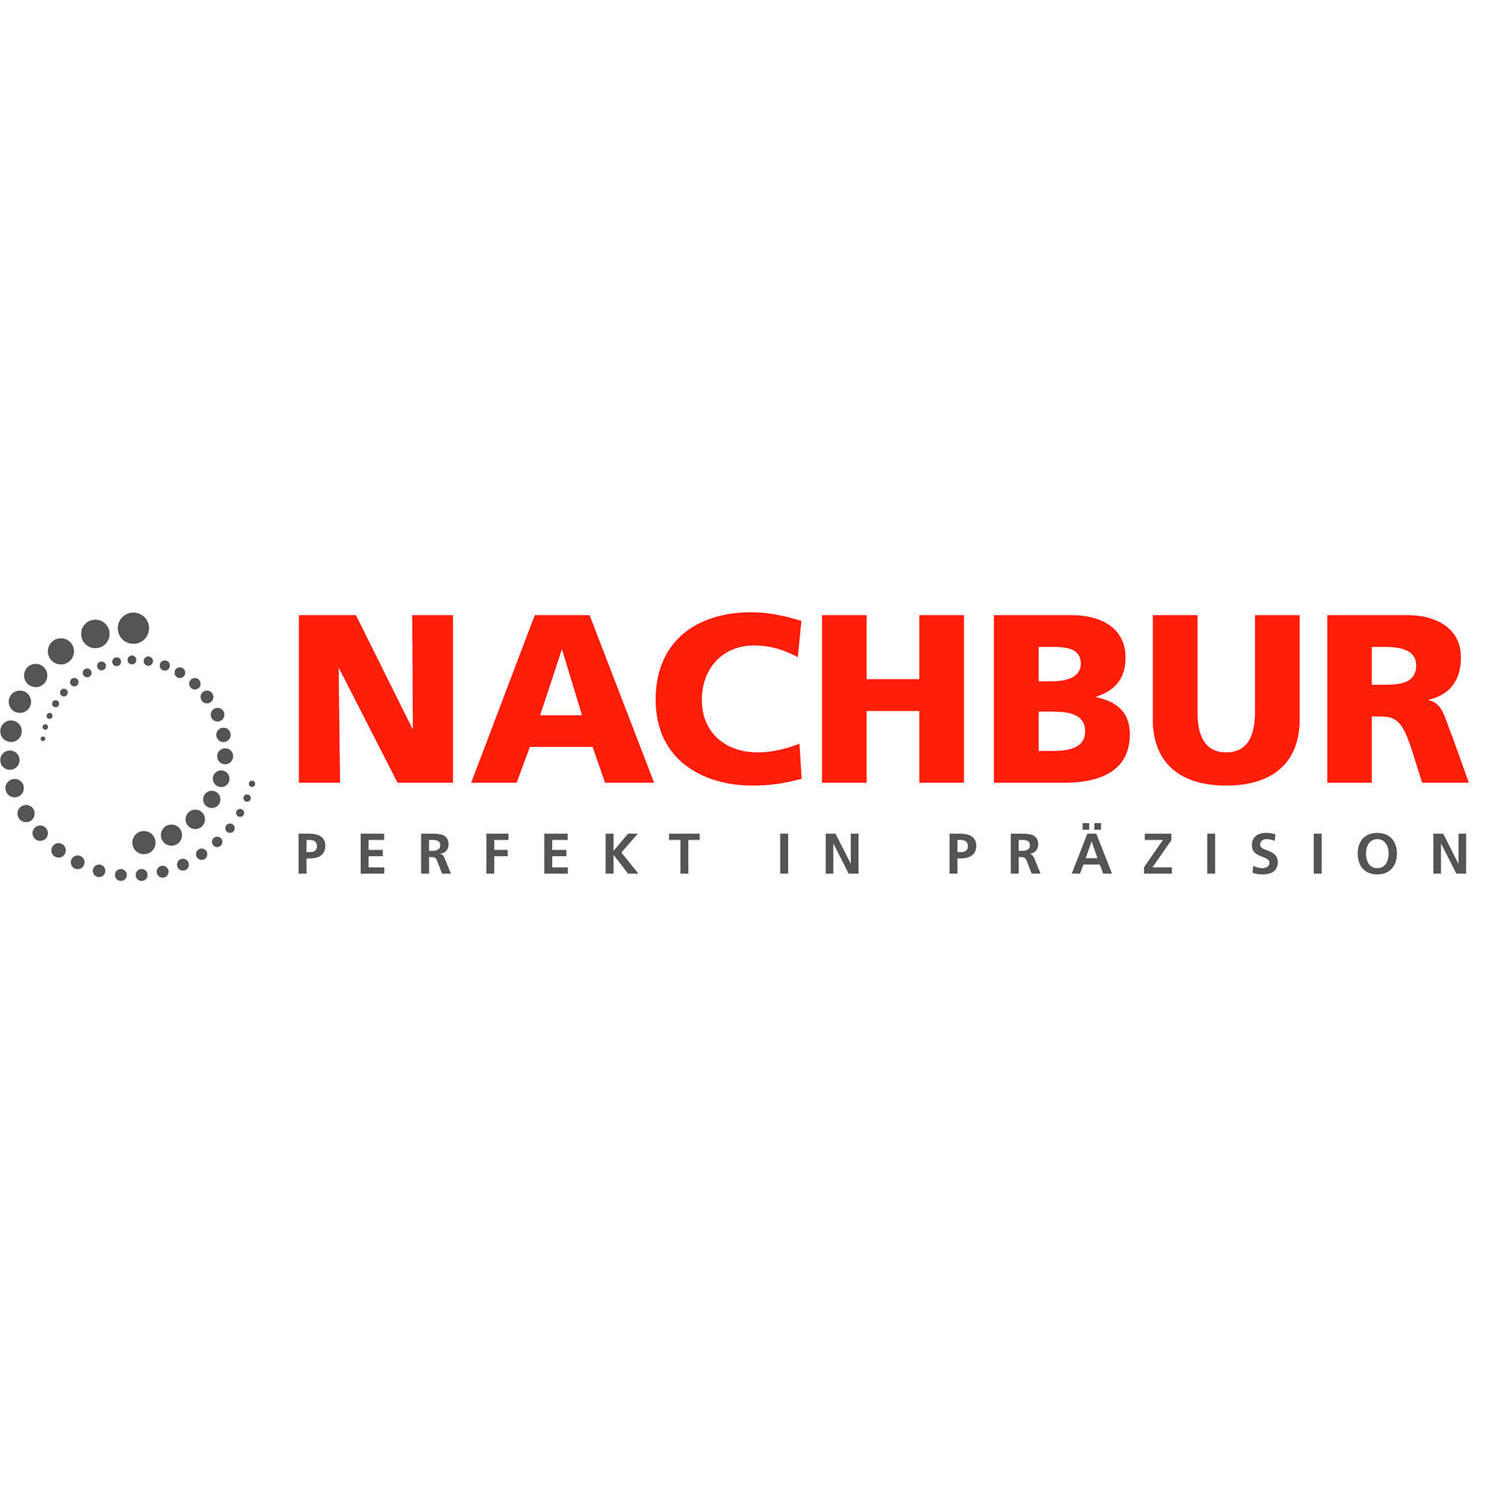 Nachbur AG Logo